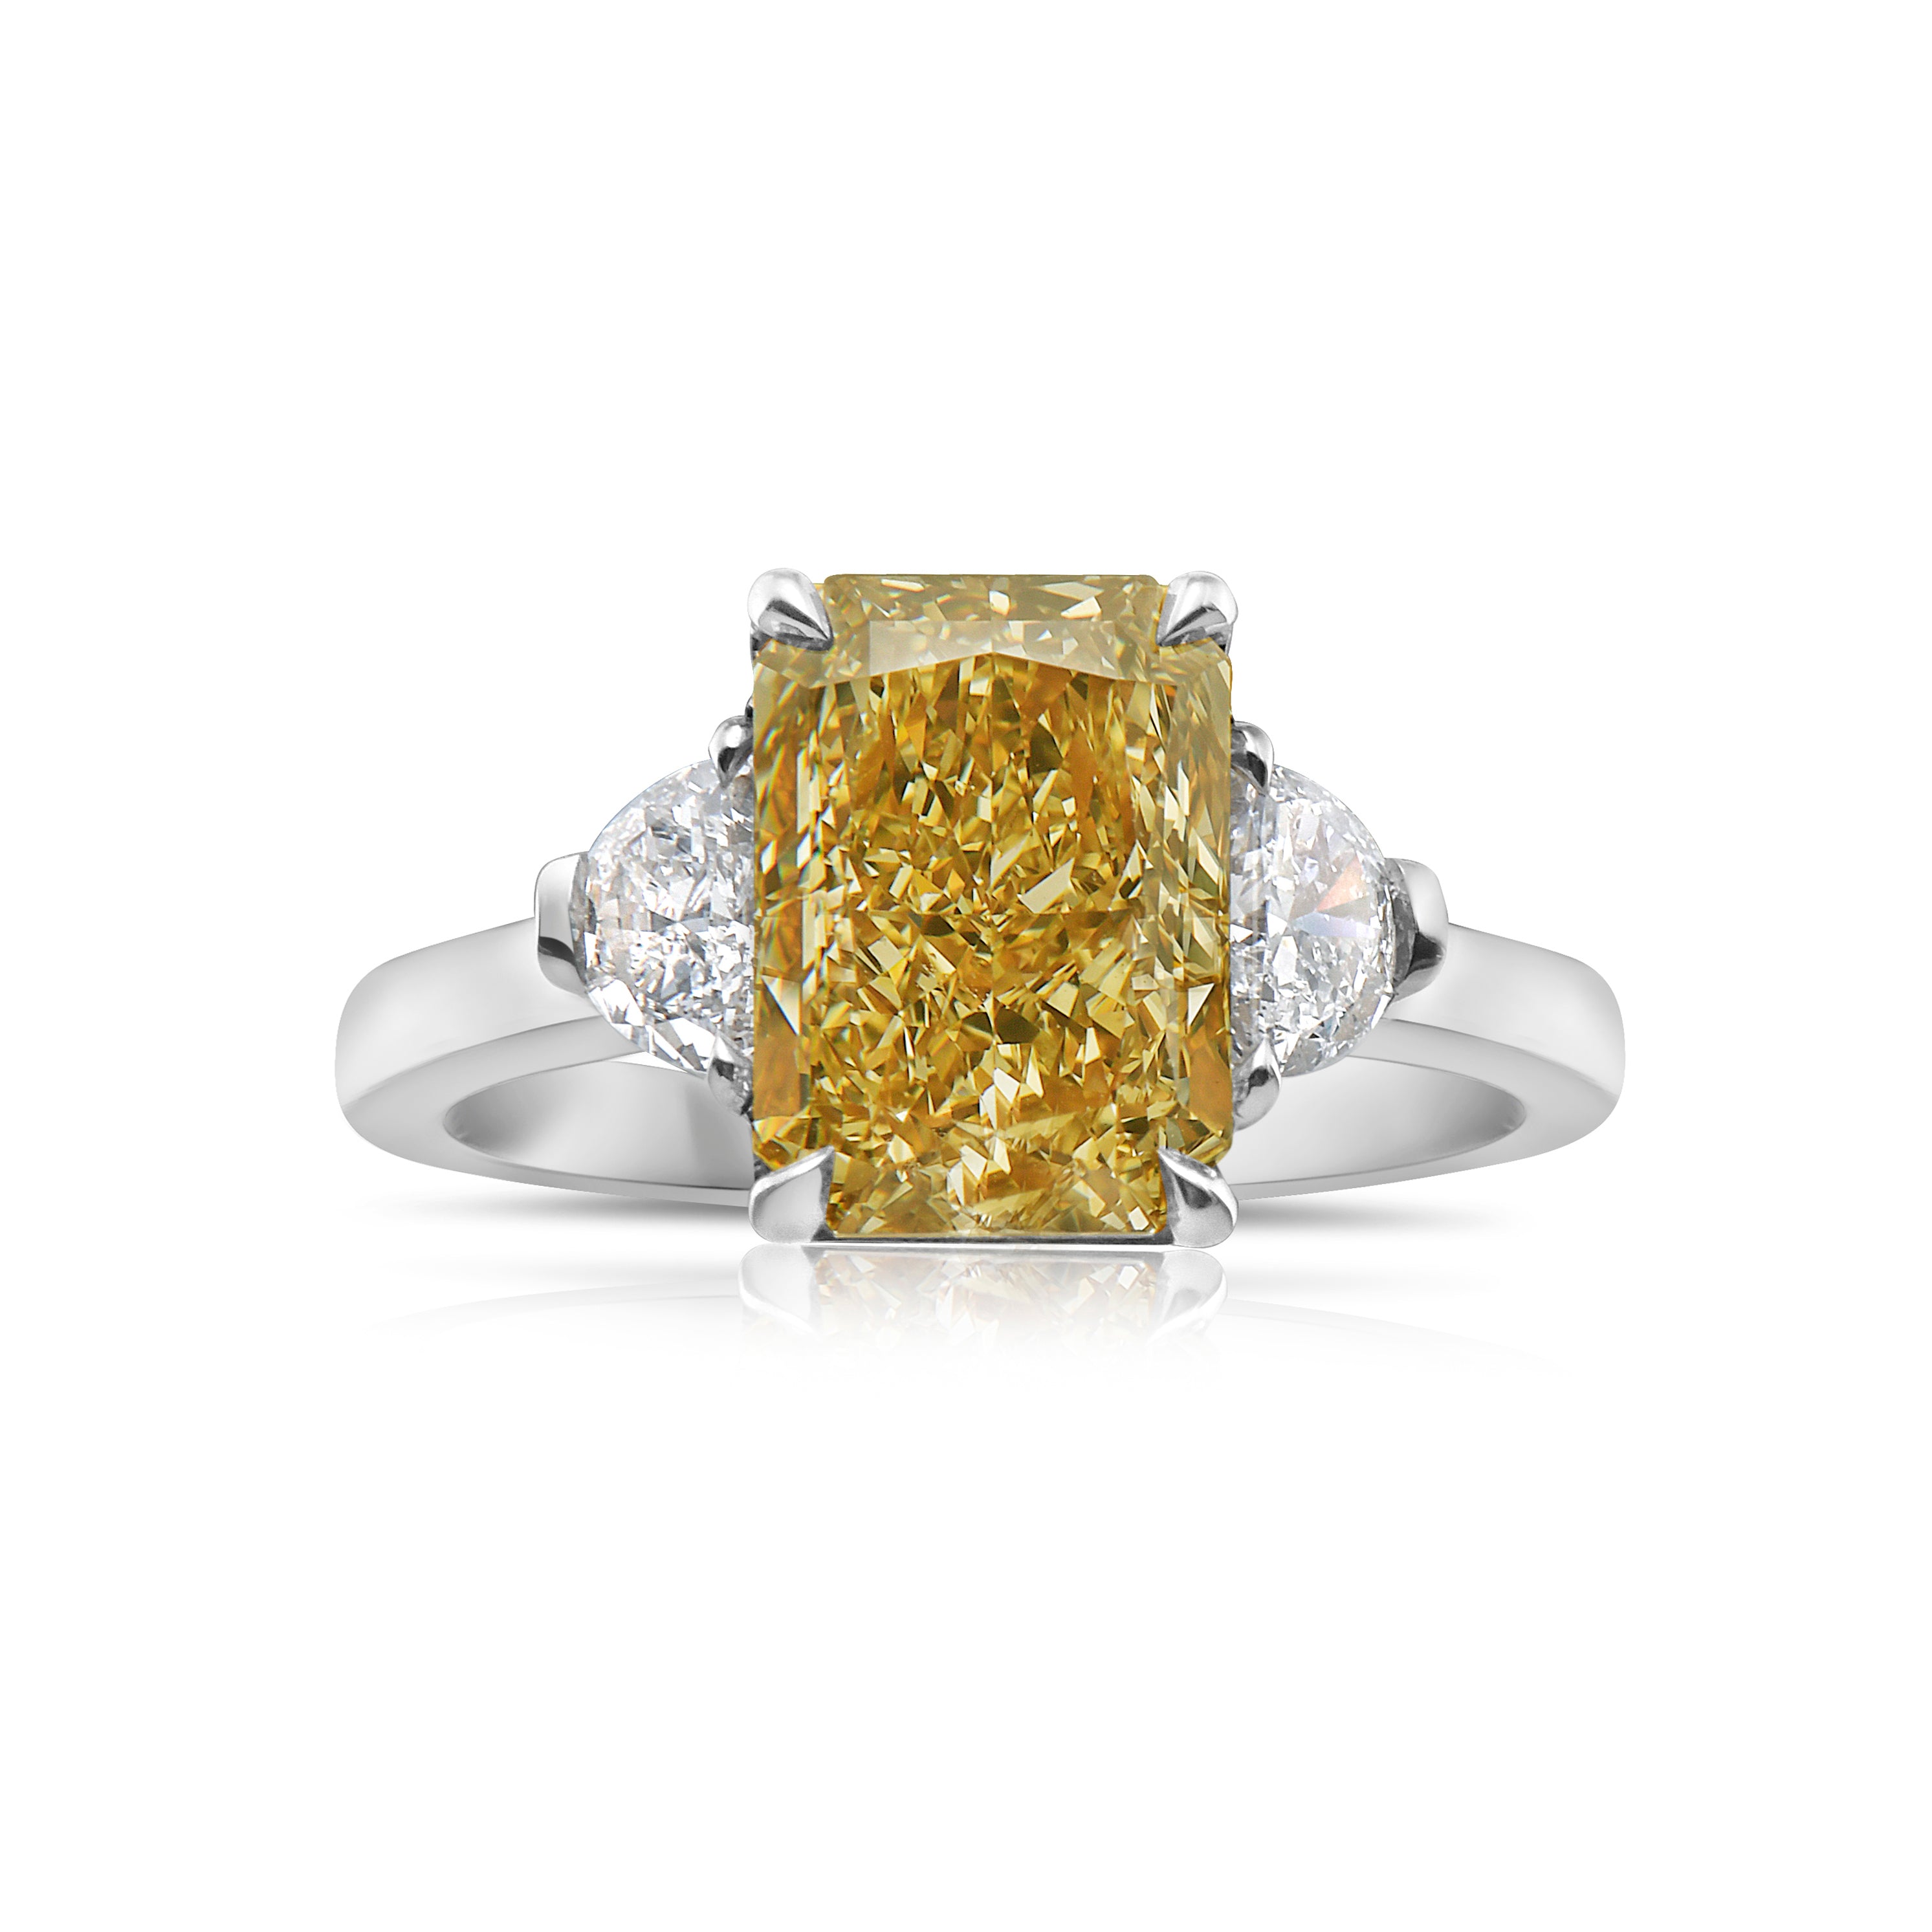 3.04 Carat GIA Fancy Brown Yellow Diamond Ring